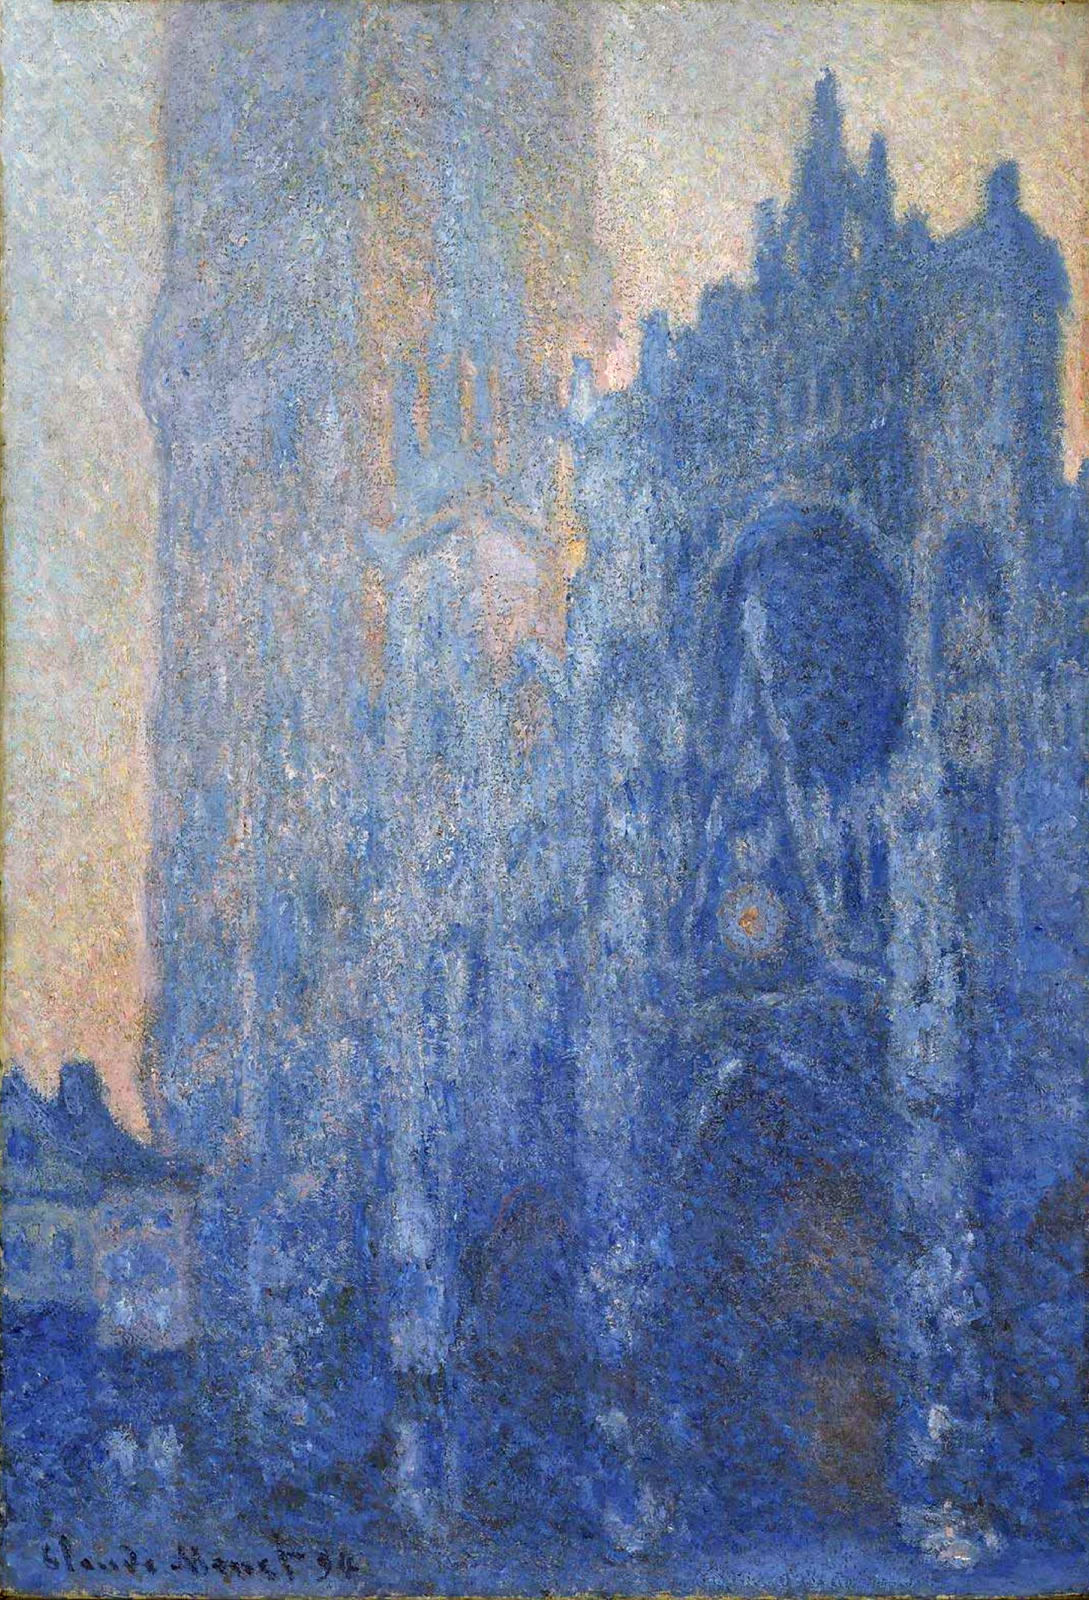 Claude+Monet-1840-1926 (626).jpg